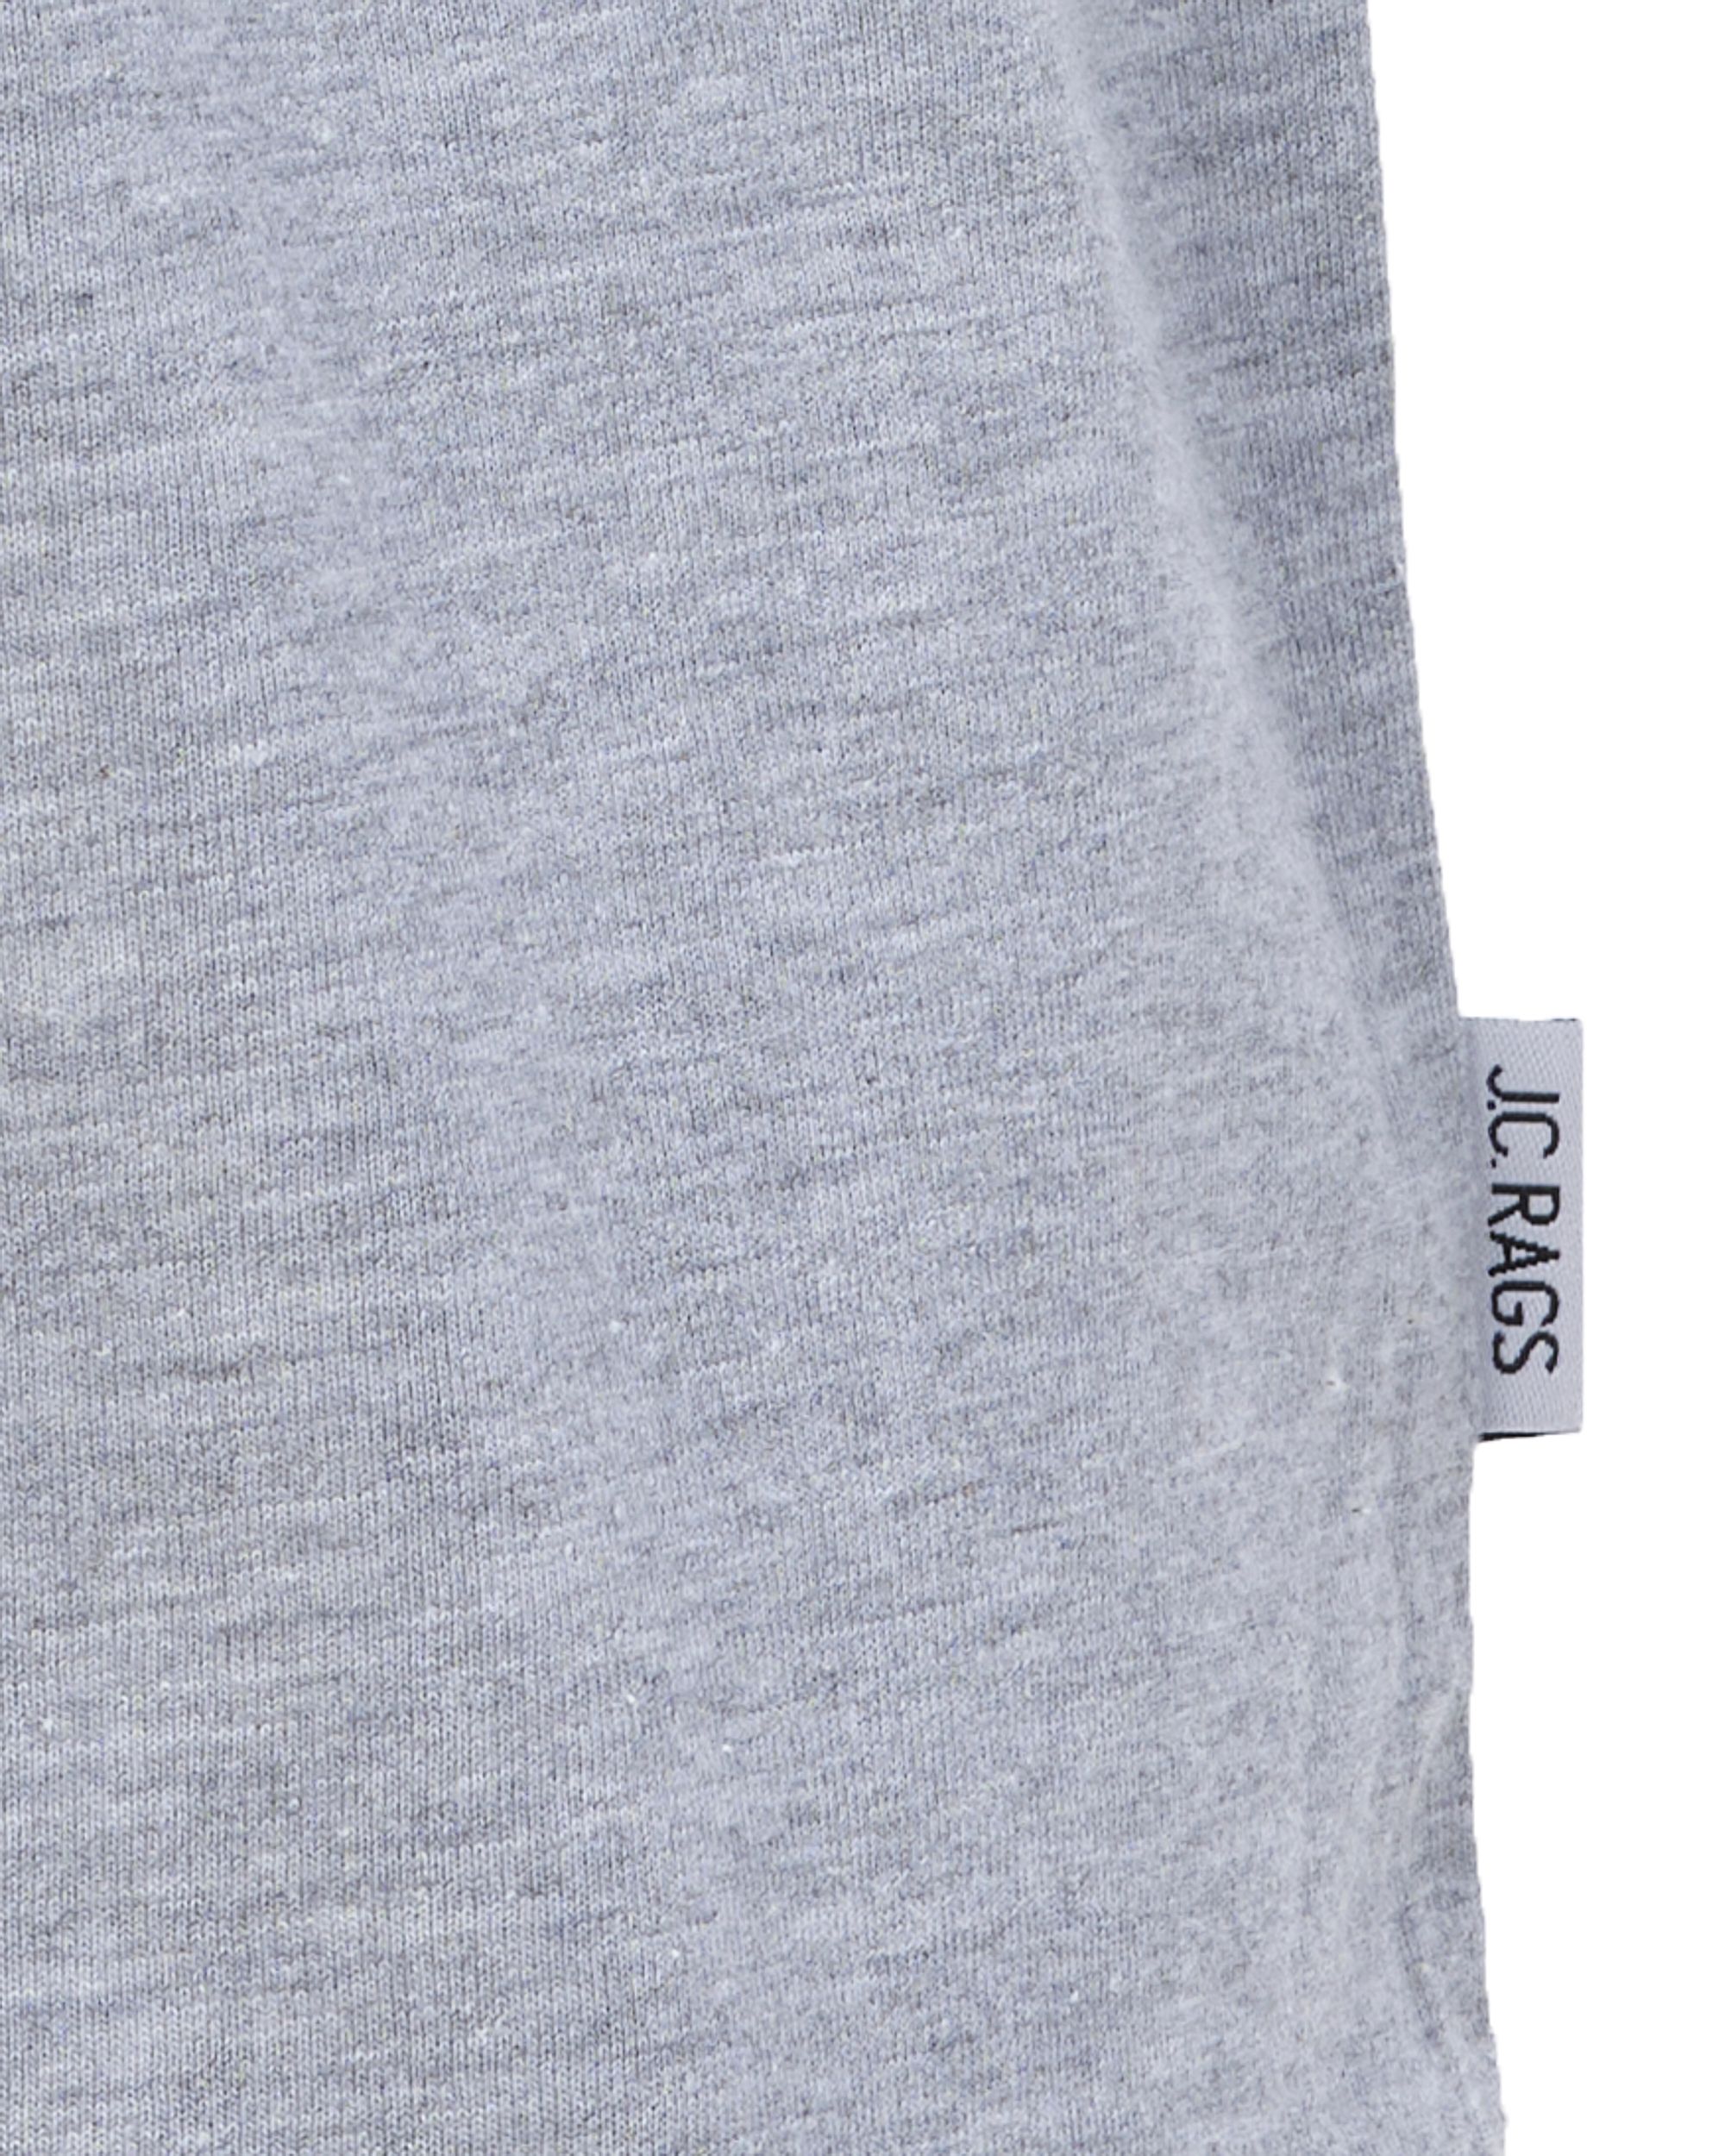 J.C Rags T shirt KM Light Grey 084877-001-L